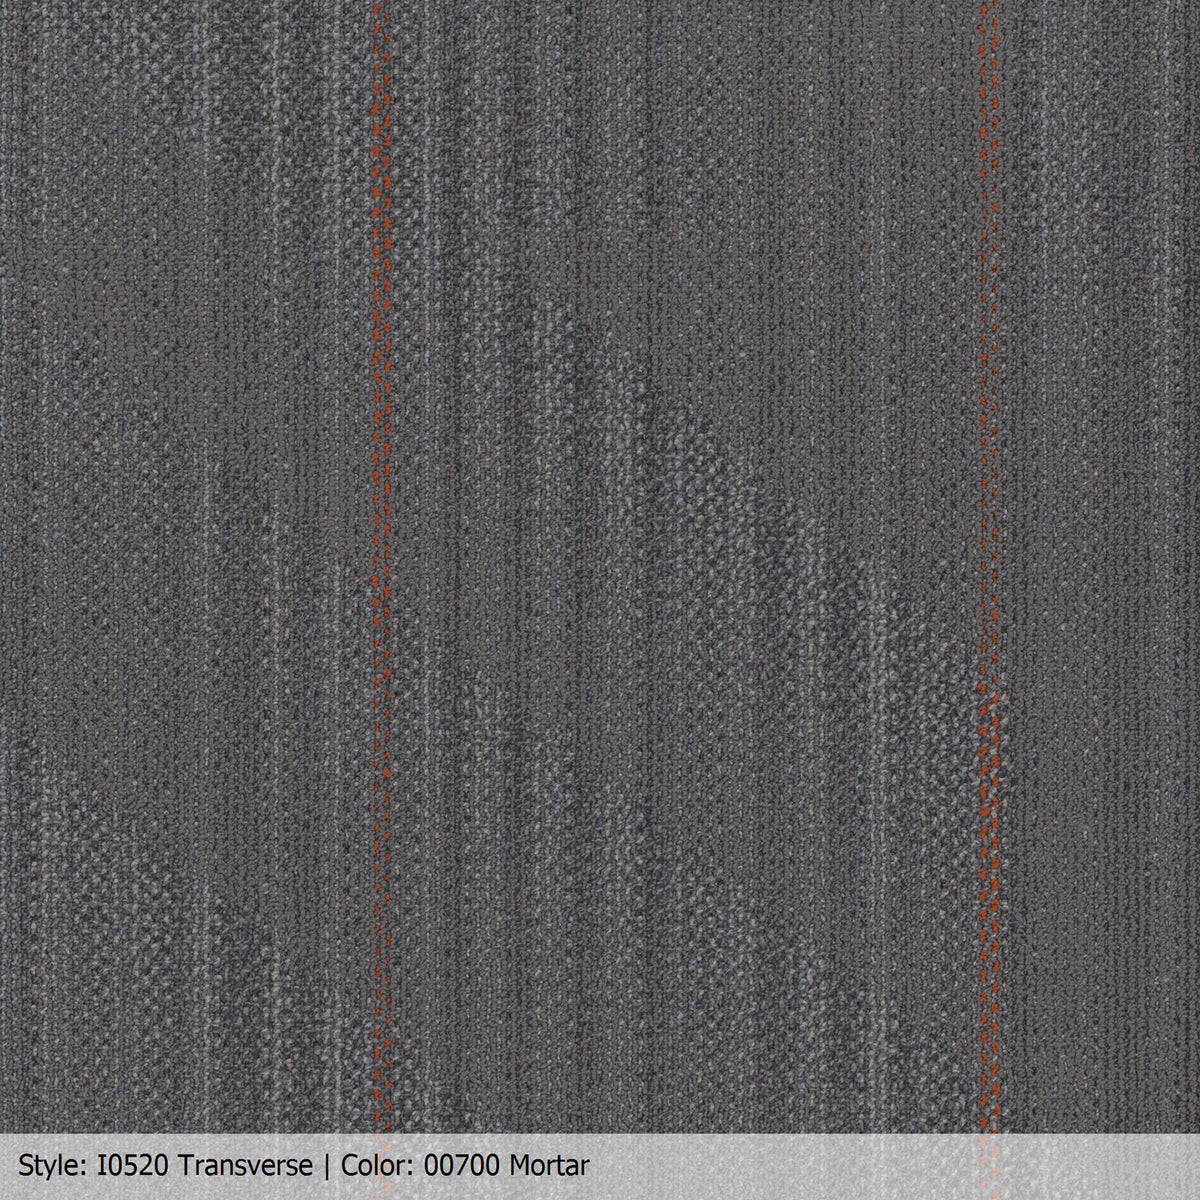 Patcraft - Infrastructure Collection - Transverse Carpet Tile - Mortar